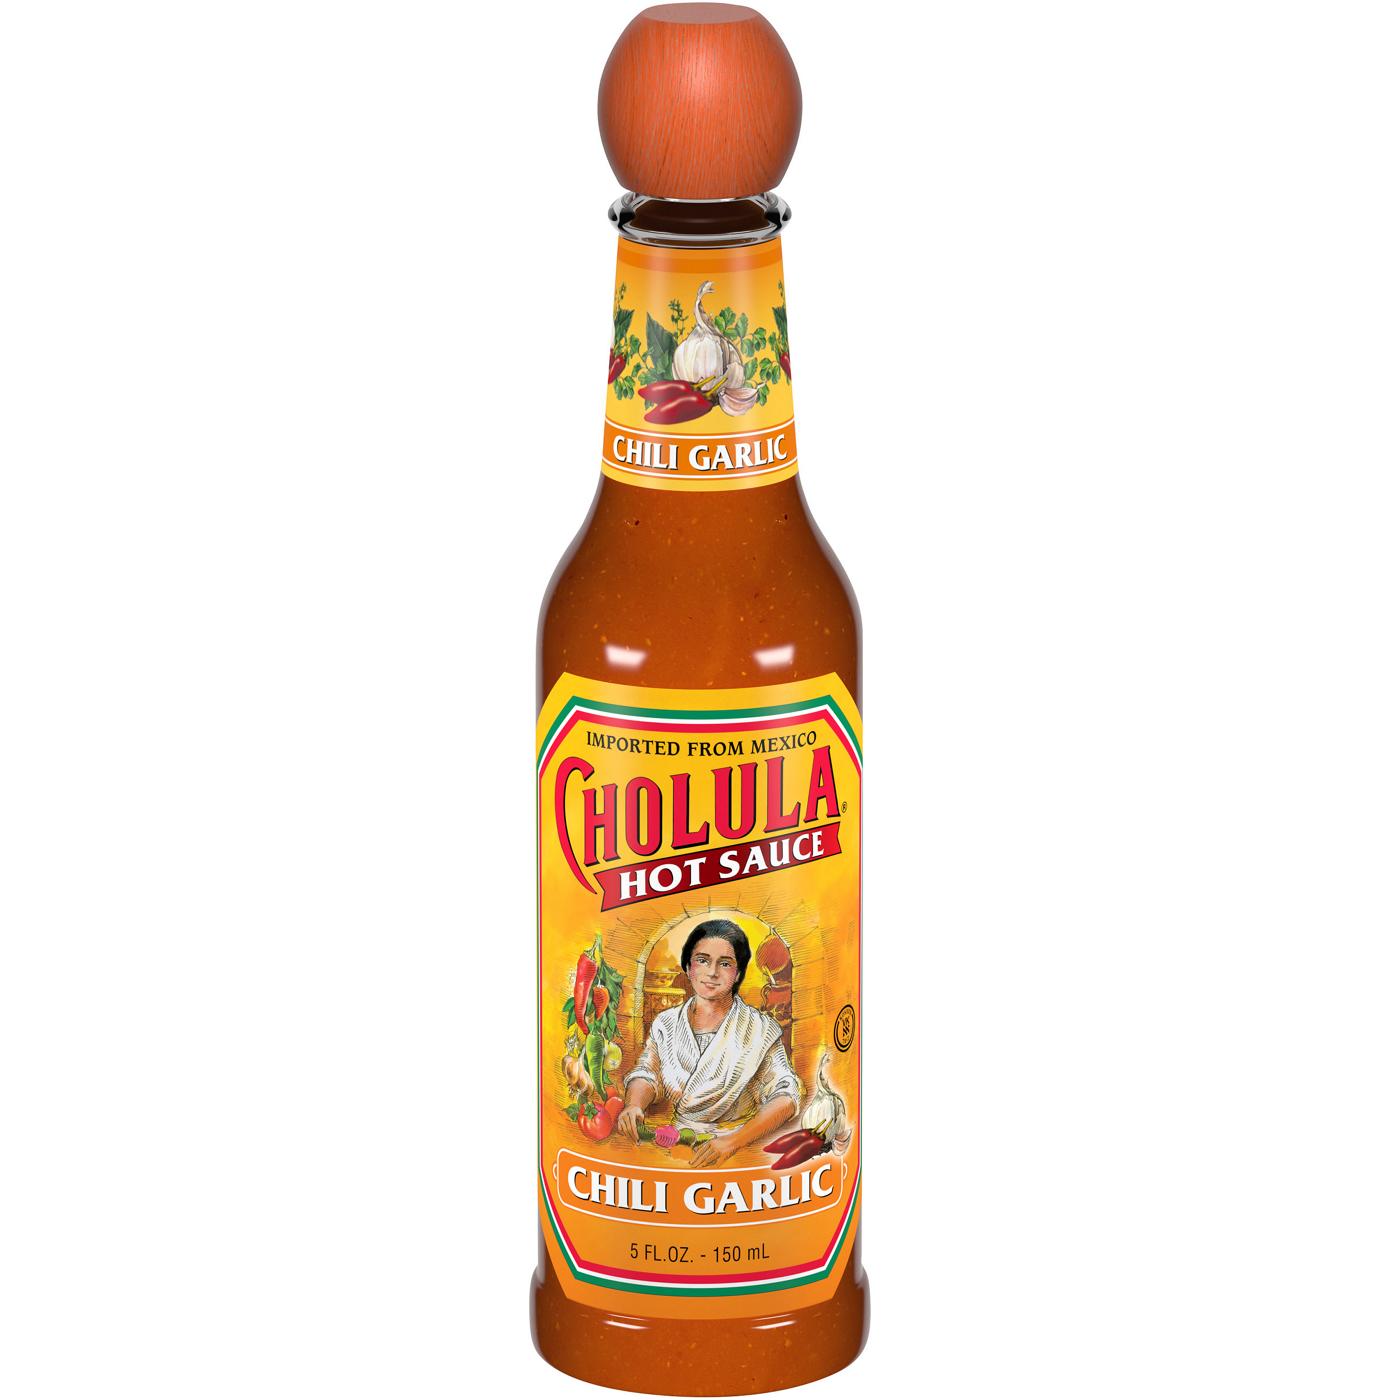 Cholula Chili Garlic Hot Sauce; image 1 of 8